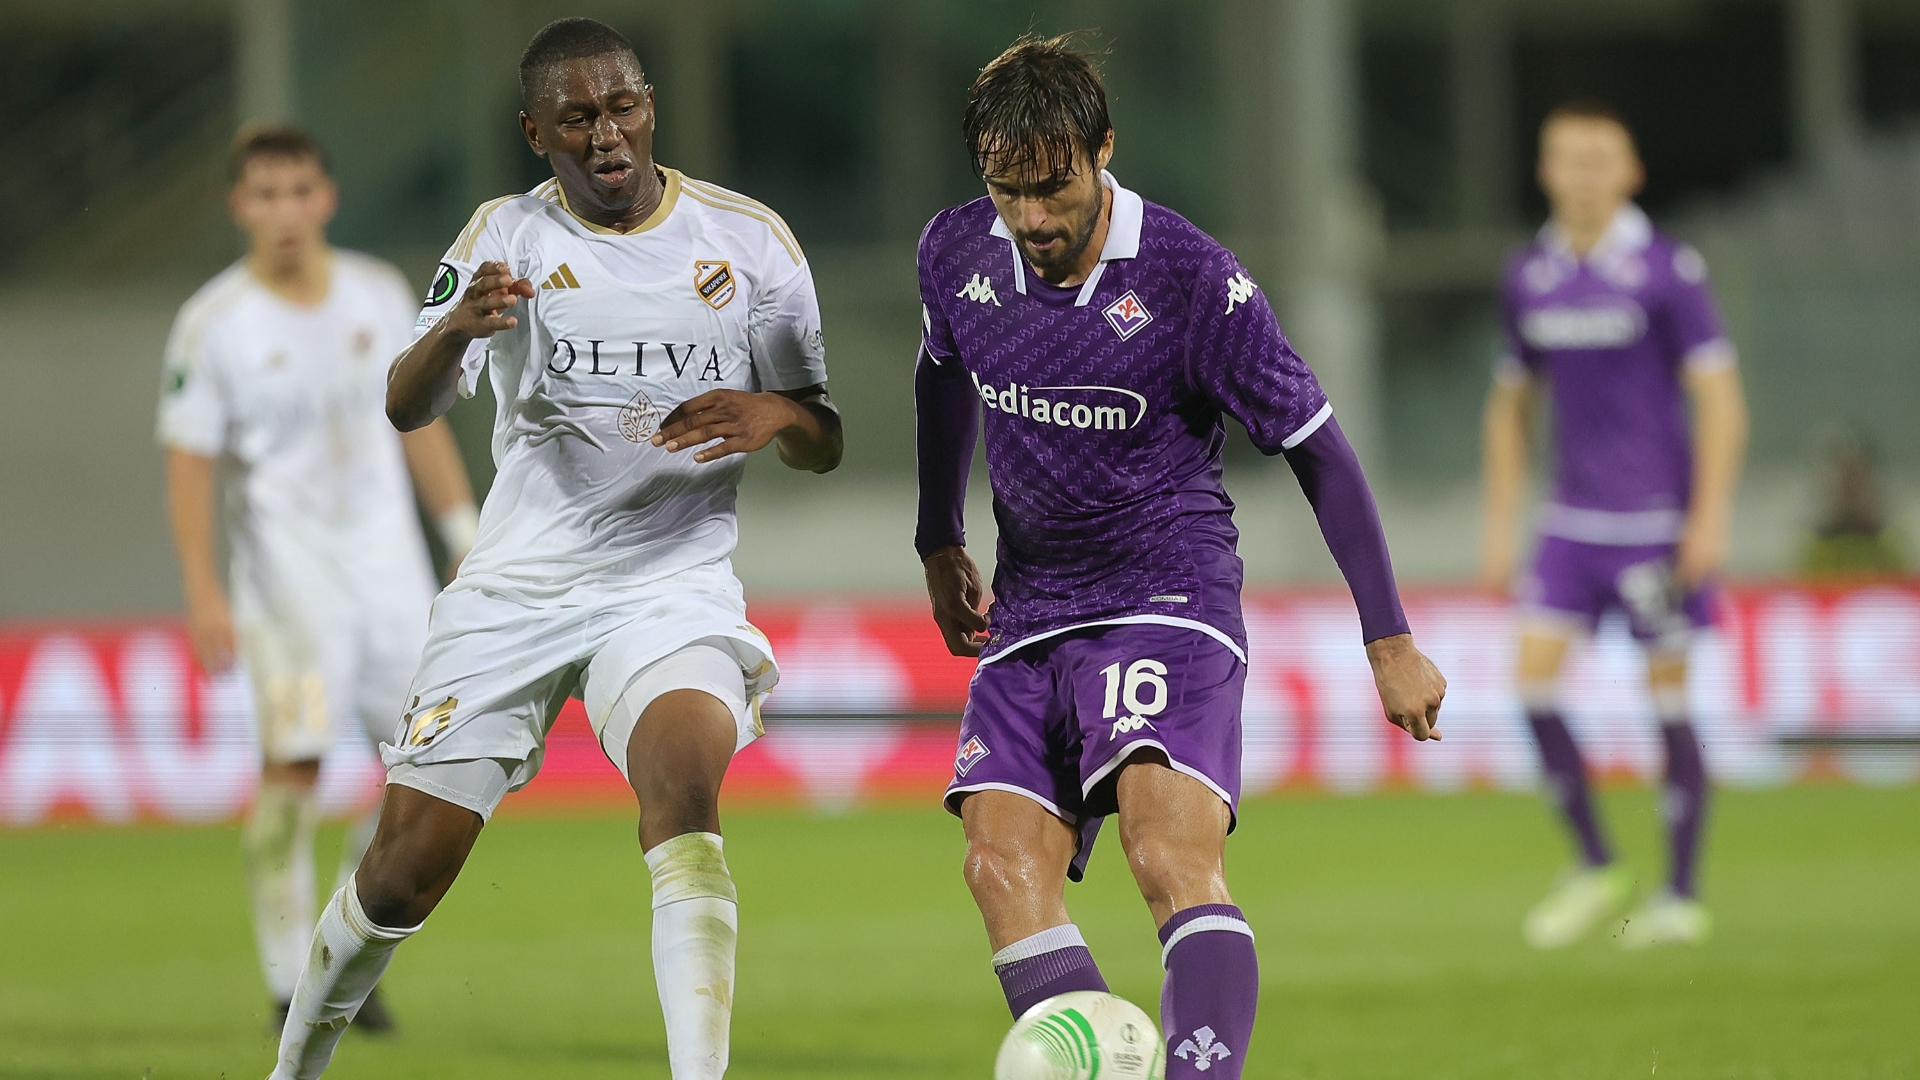 Fiorentina vs Ferencvaros Prediction and Betting Tips